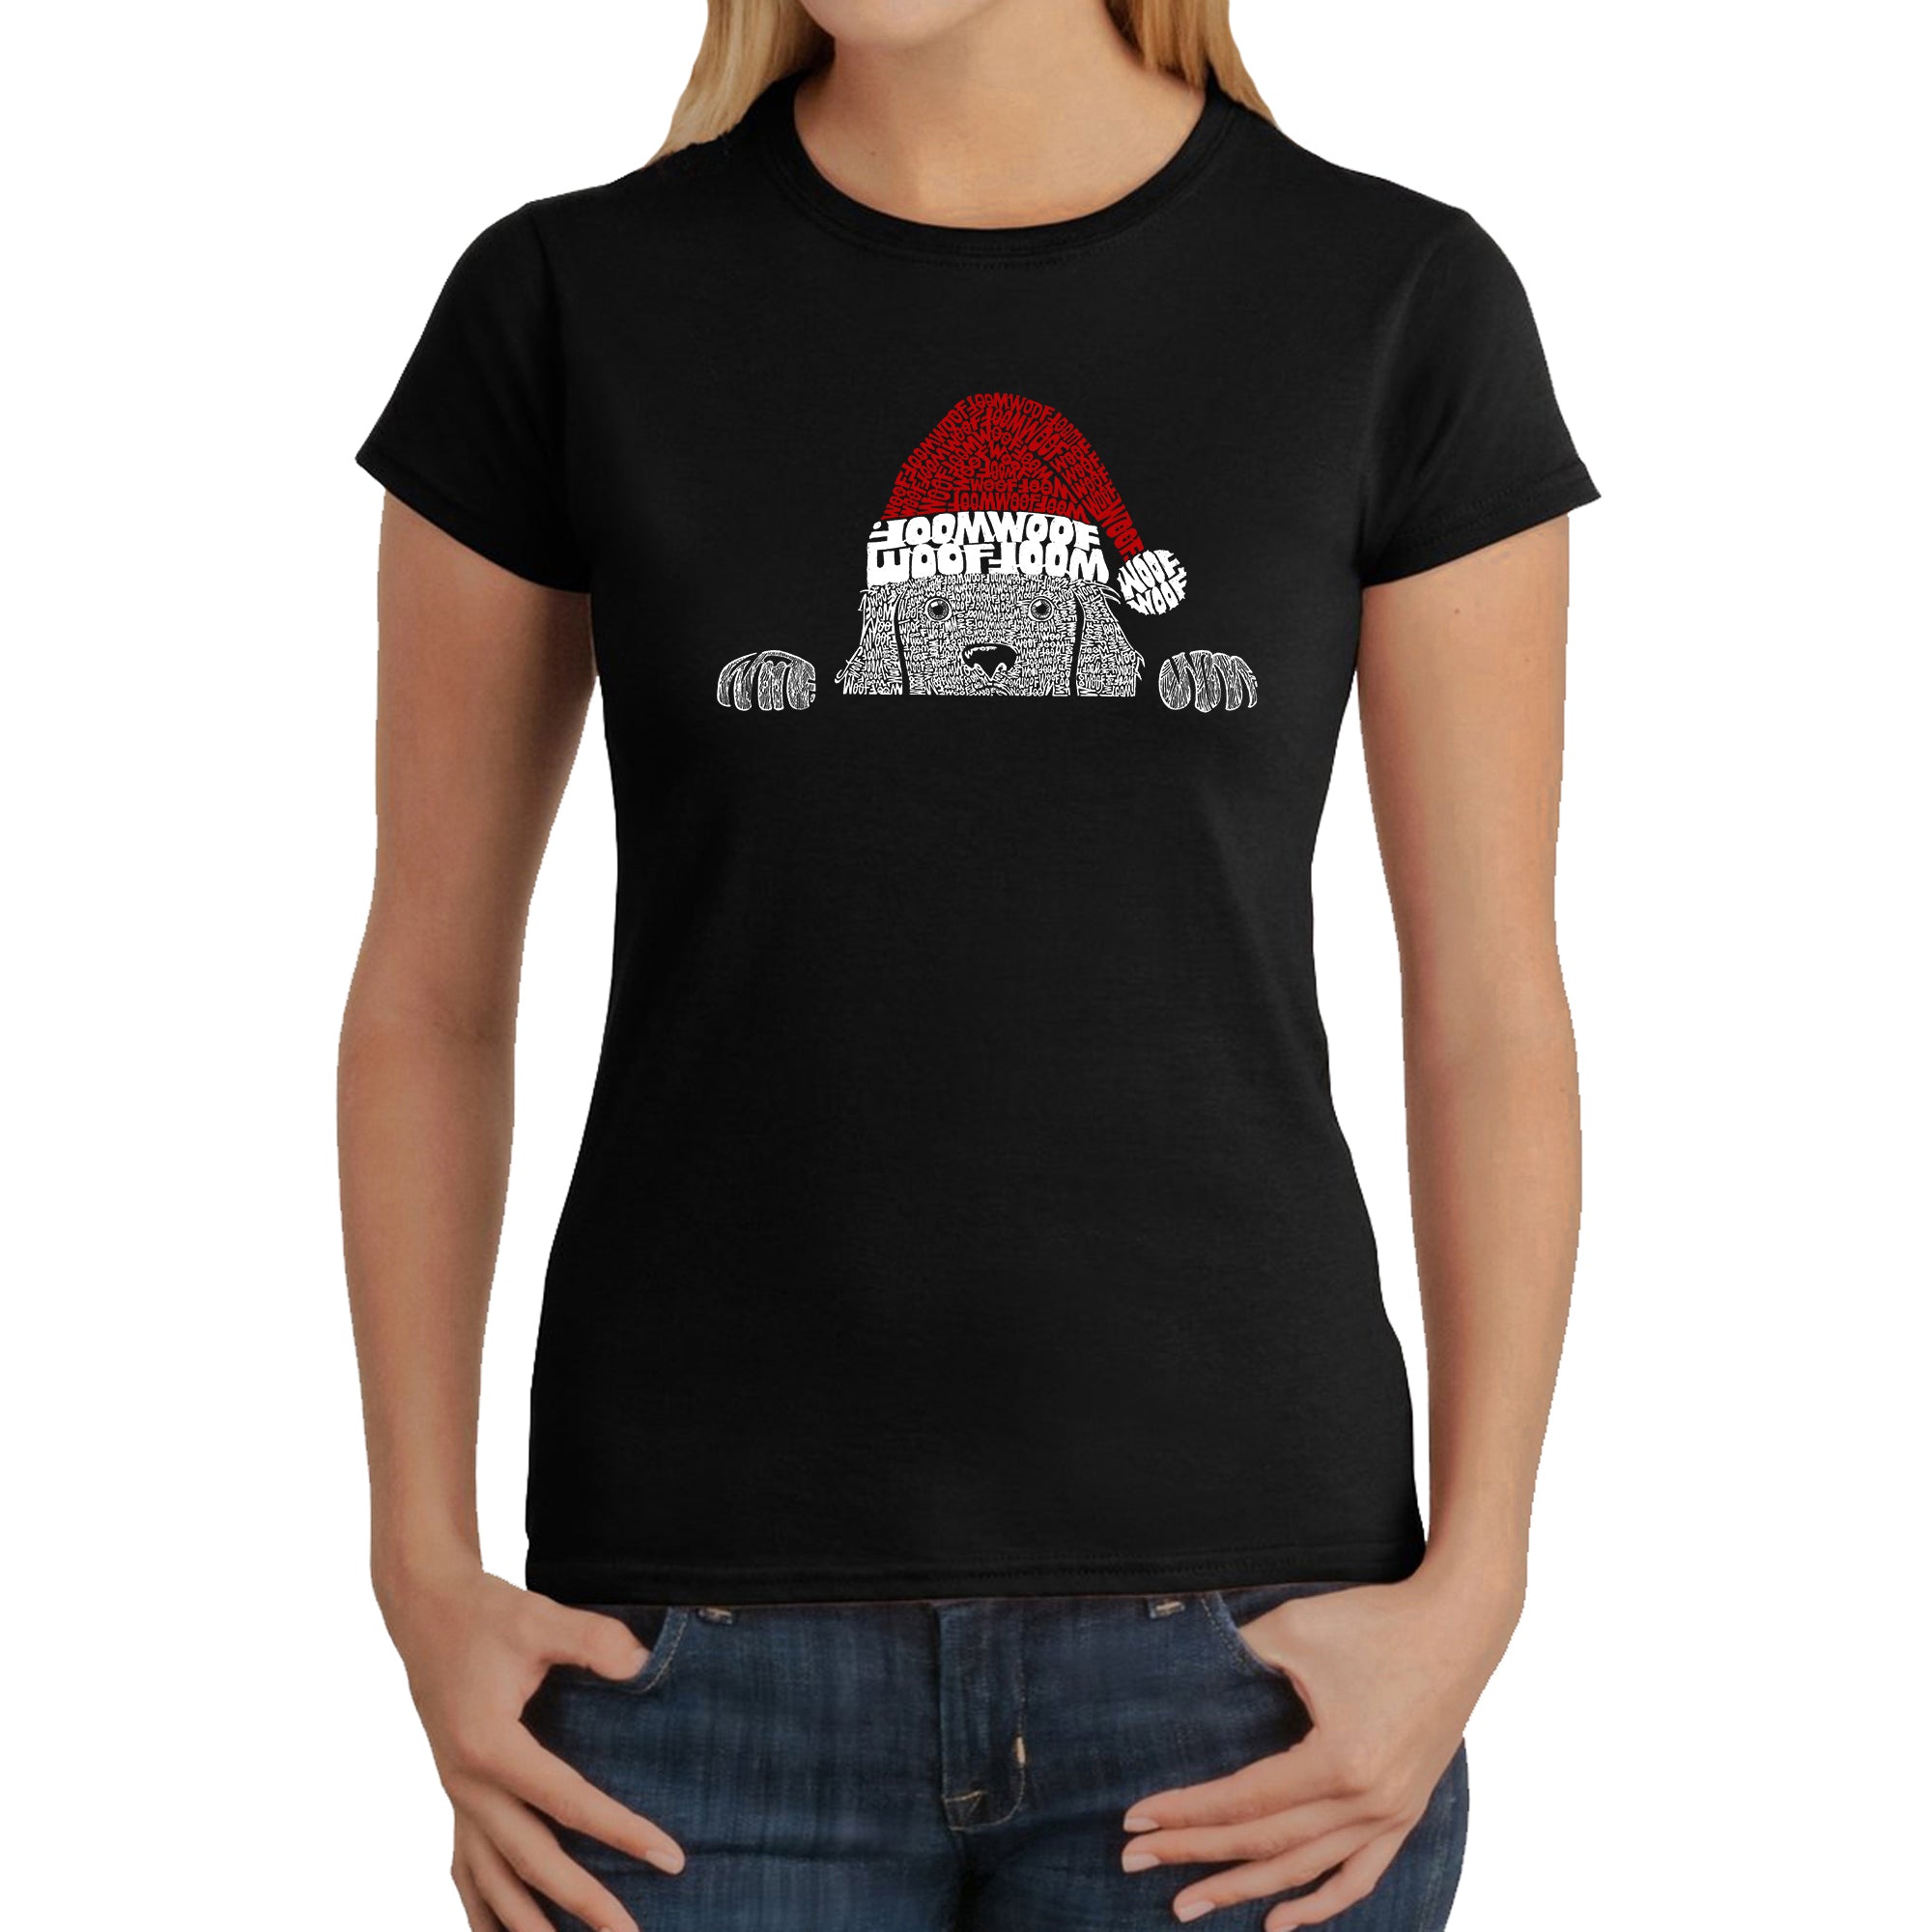 Christmas Peeking Dog - Women's Word Art T-Shirt - Pink - Large